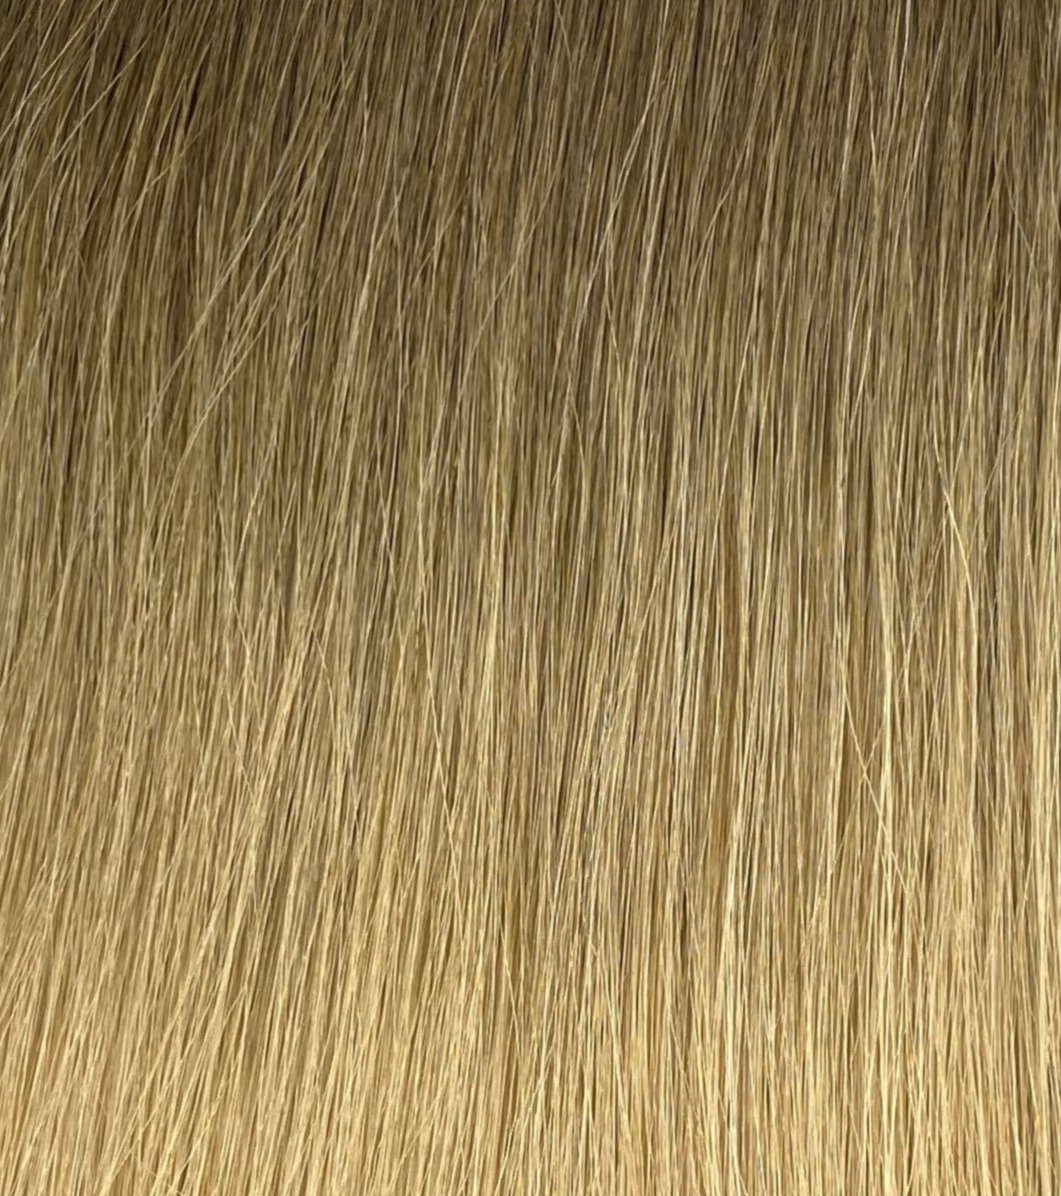 Double Weft Ombre #8 & DB4 - 24 Inches - Dark Blonde into Dark Golden Blonde - 70 Grams - Image 1